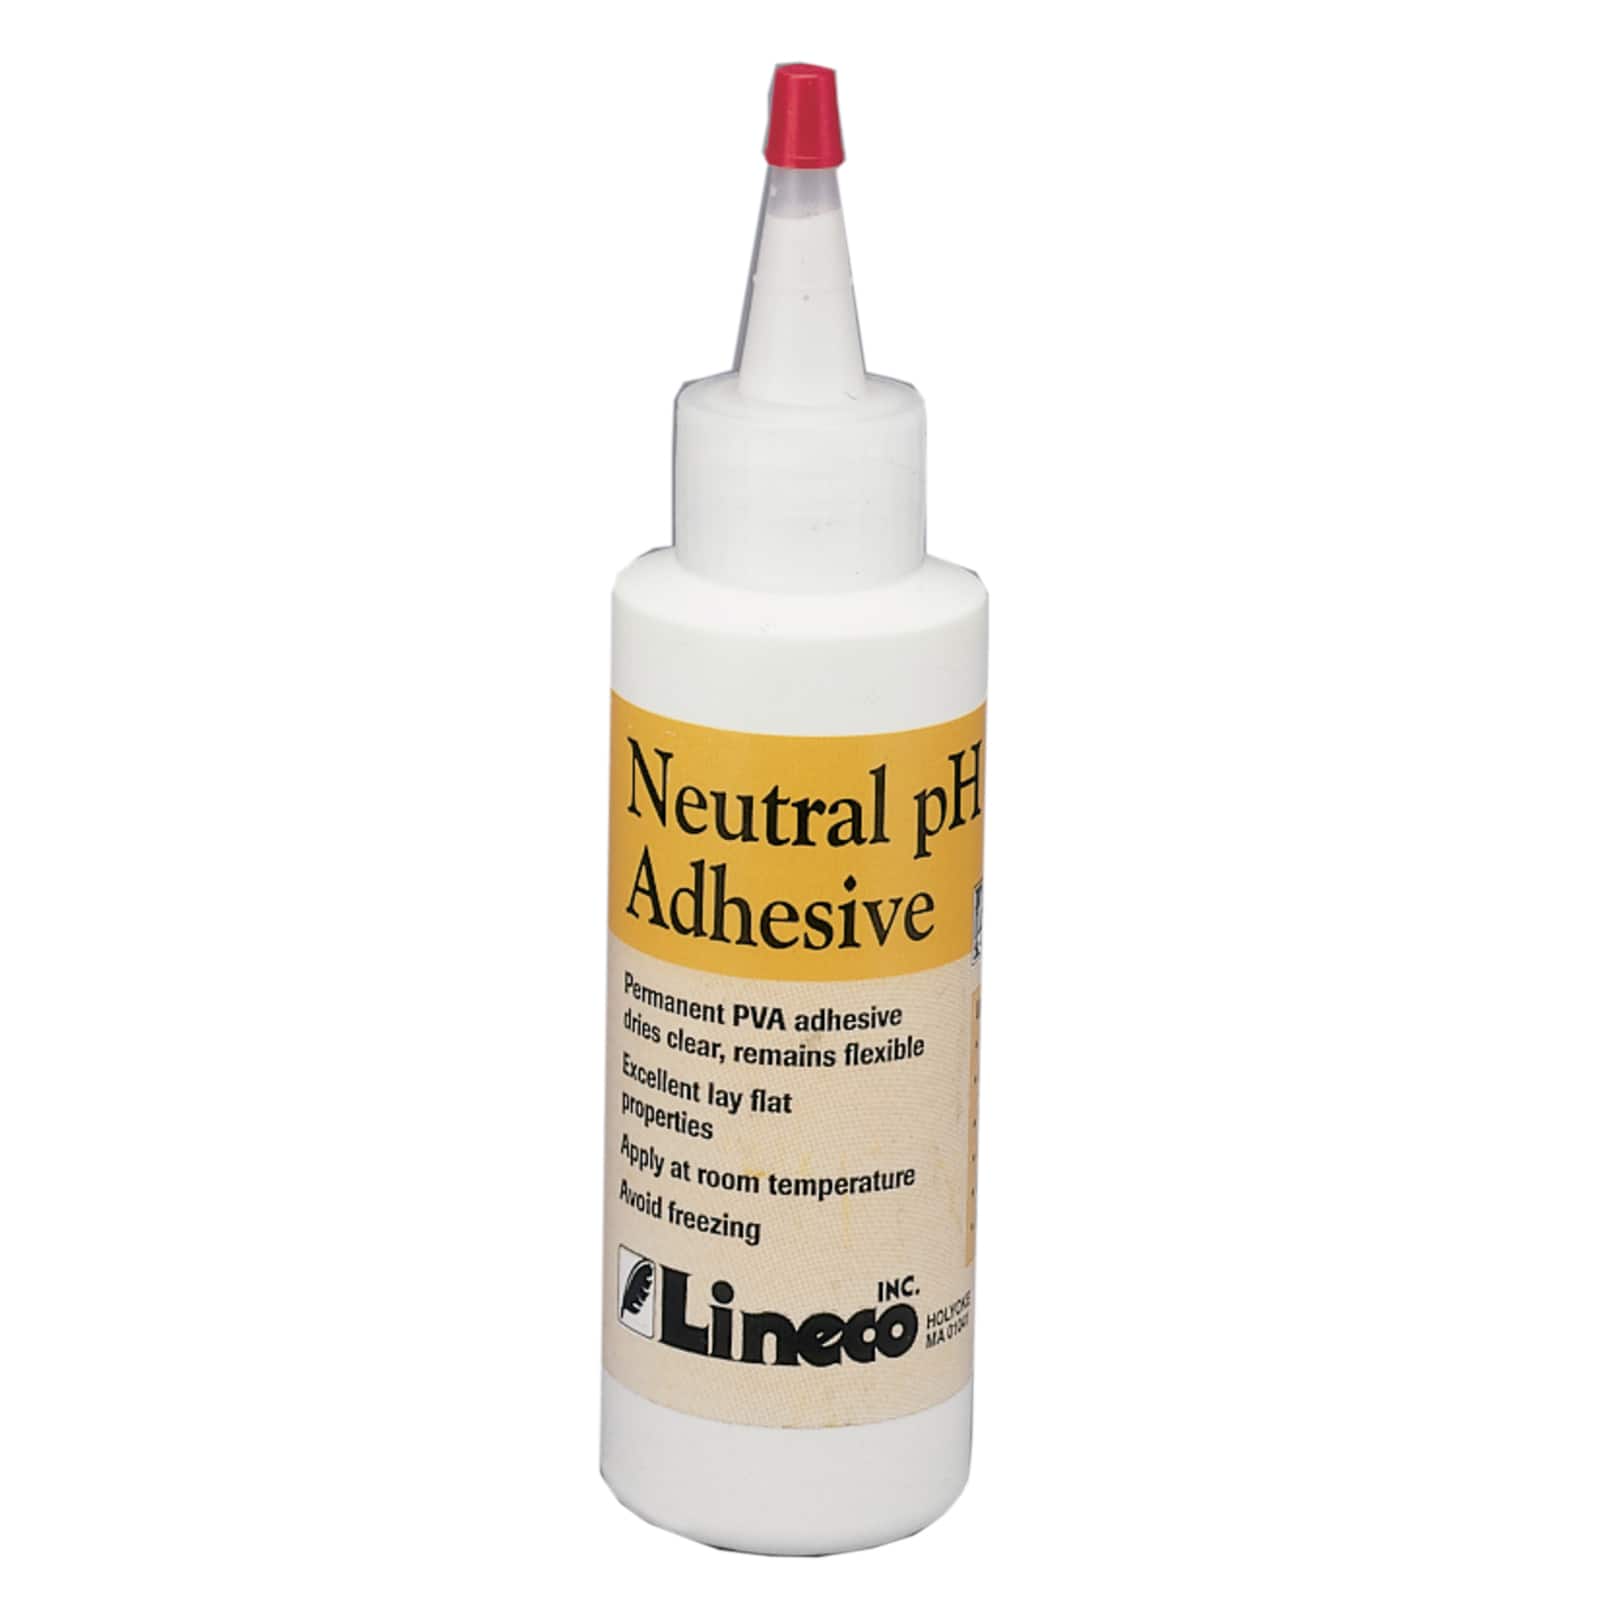  LINECO Neutral pH Methyl Cellulose Adhesive, 1.5 Oz